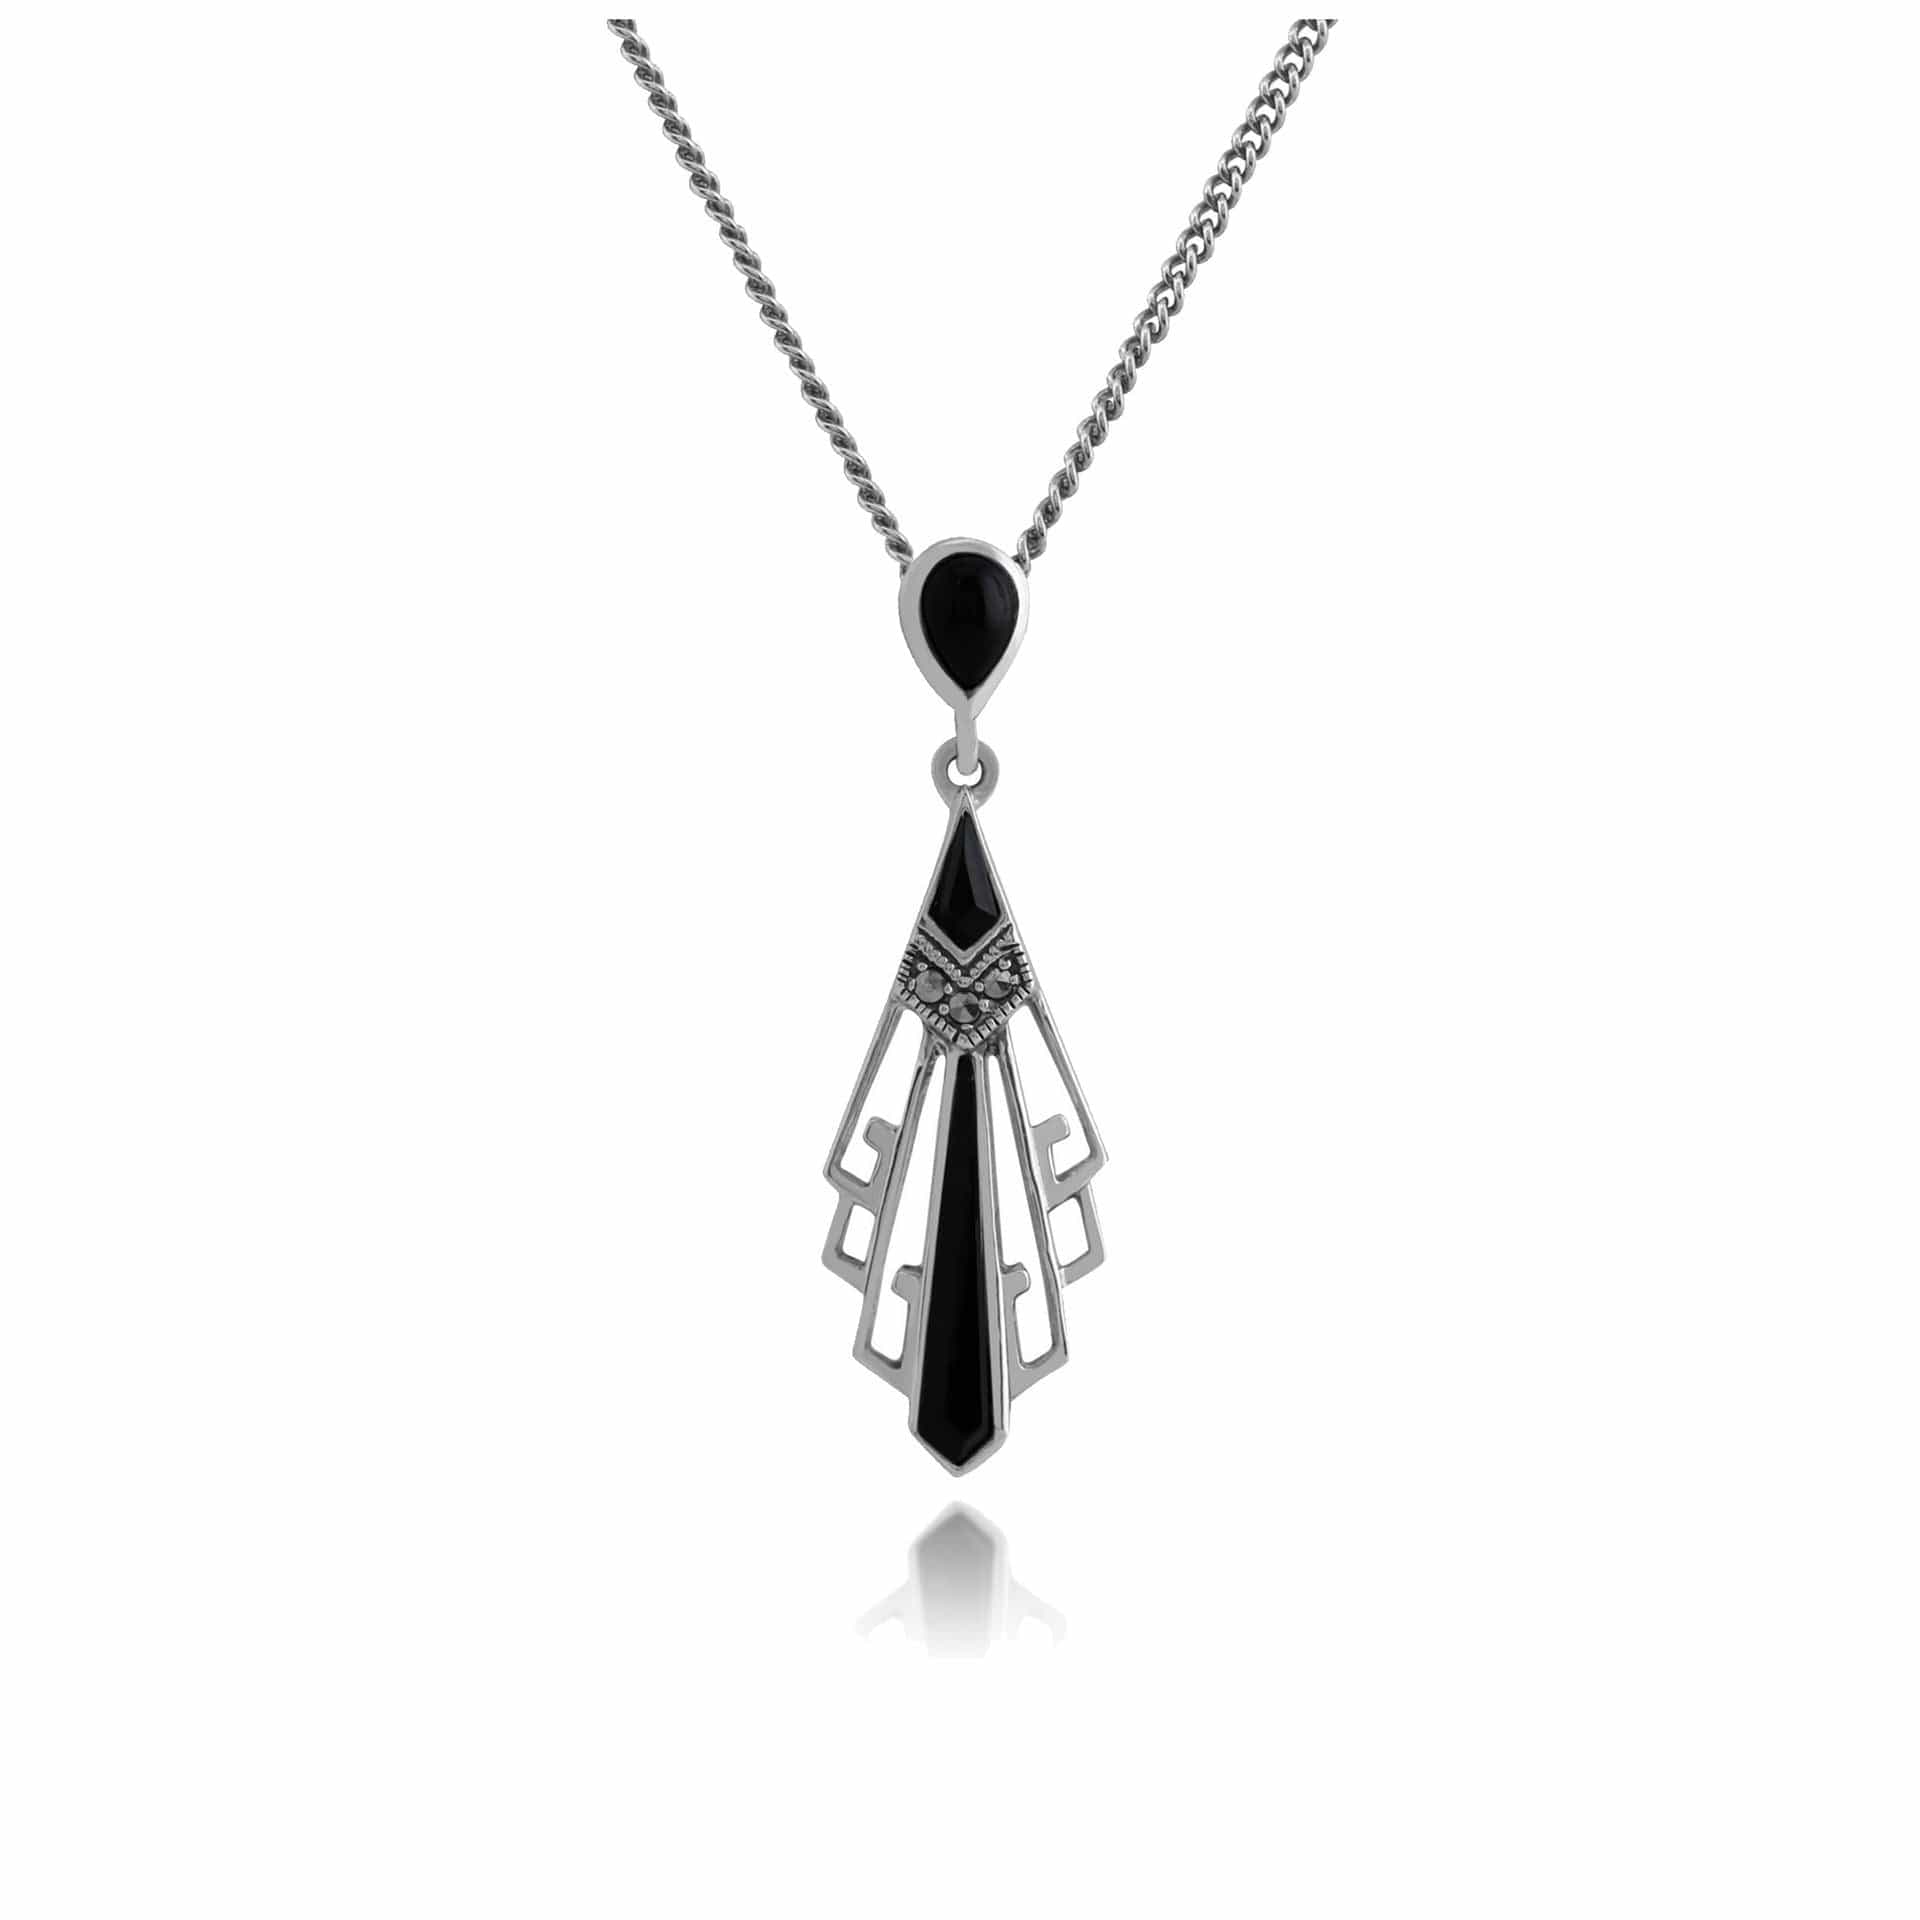 Image of Art Deco Style Black Onyx & Marcasite Open Work Fan Drop Necklace in 925 Sterling Silver